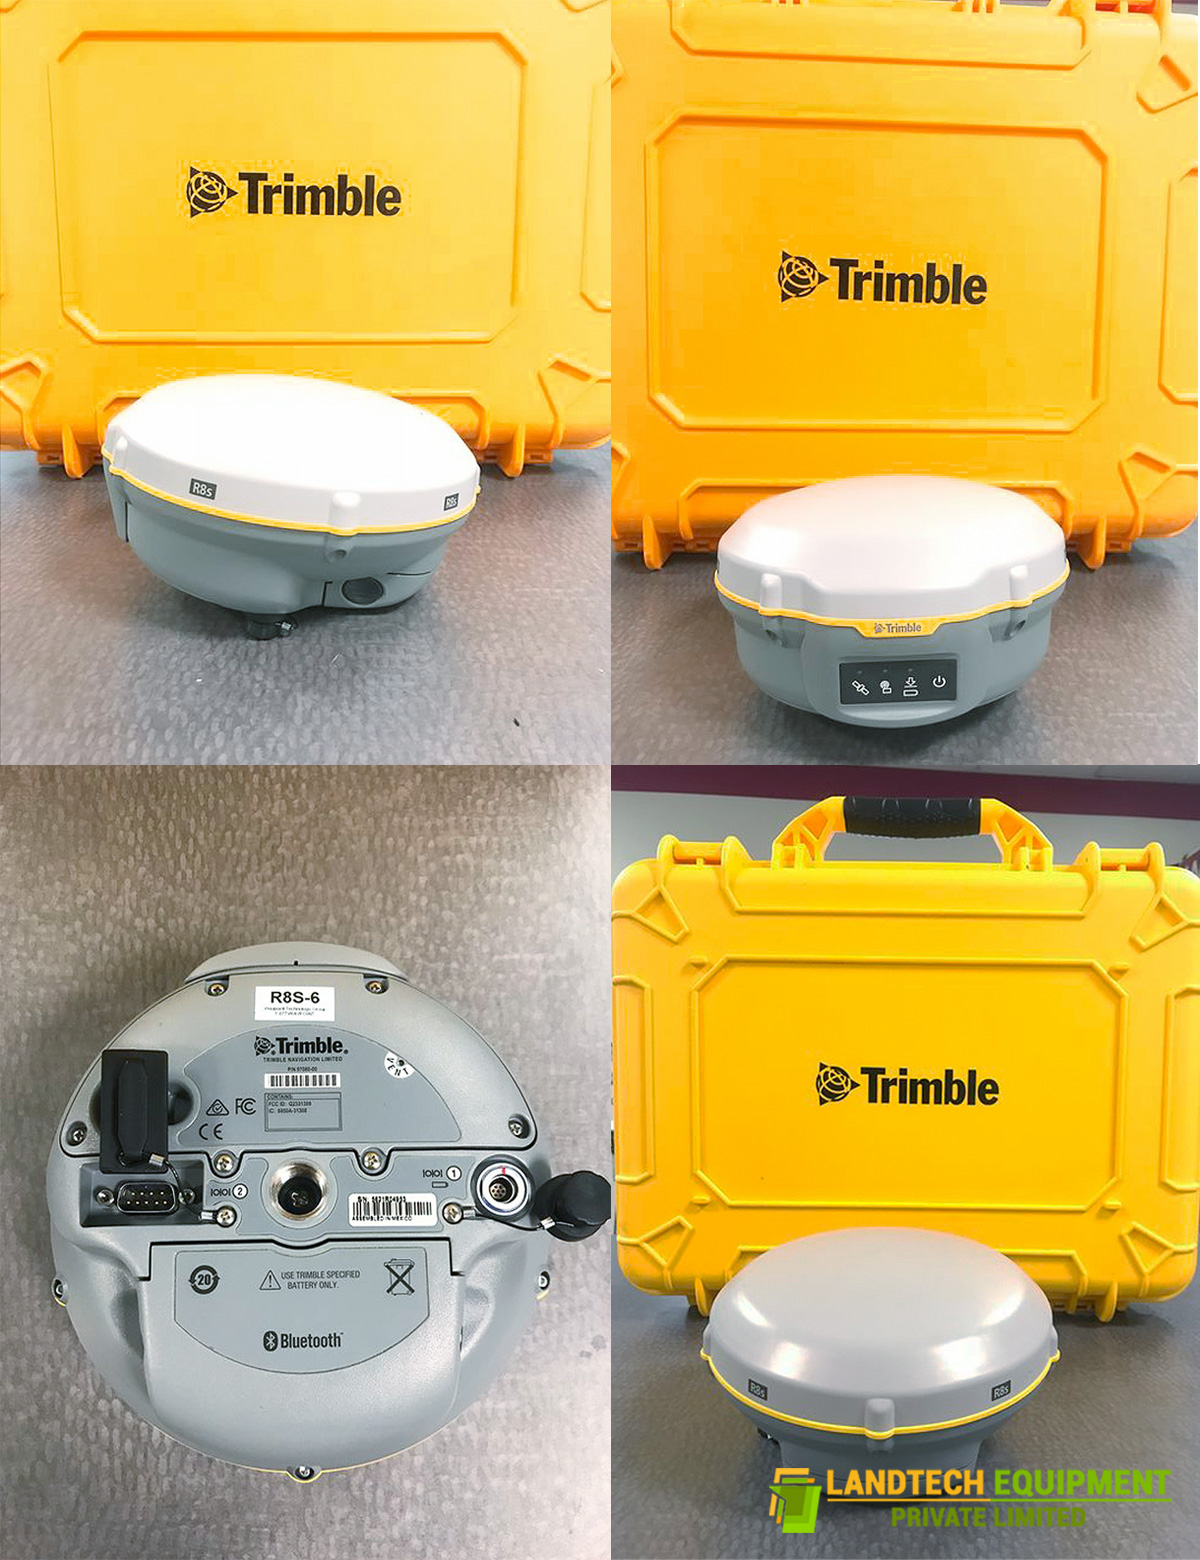 Trimble-R8S-Base-Rover-Sale.jpg